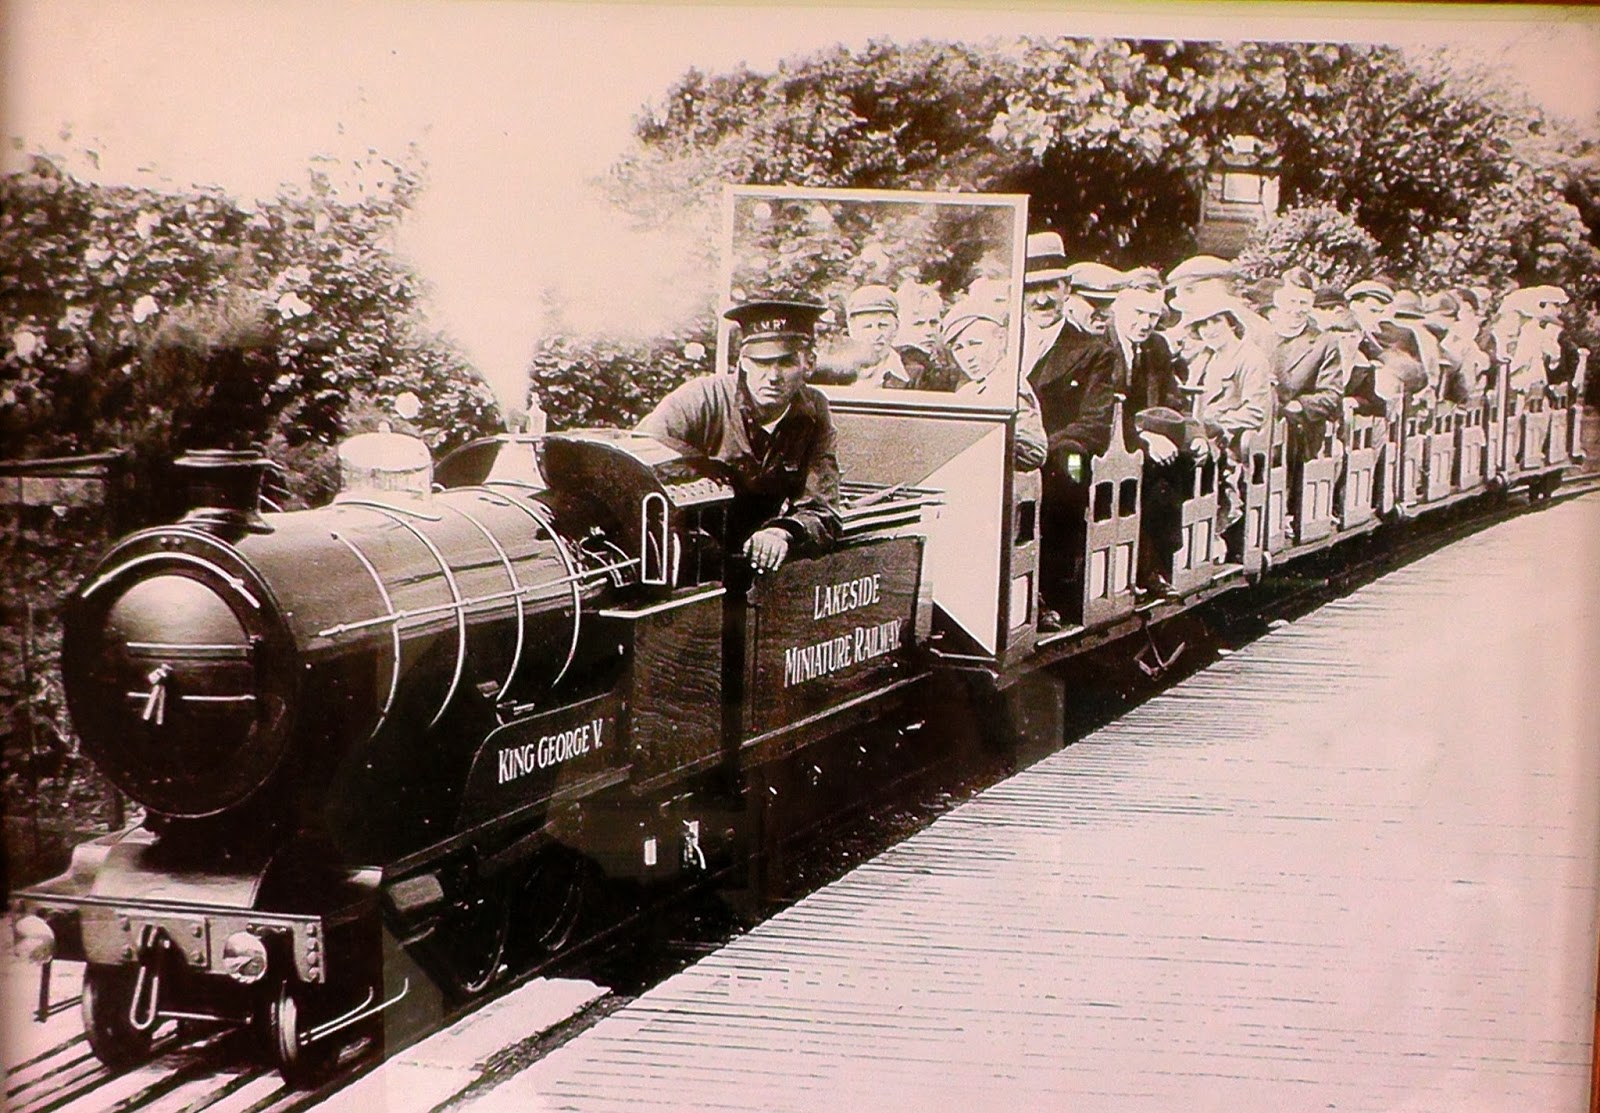 Narrow Gauge Railways UK: Southport Lakeside Miniature Railway